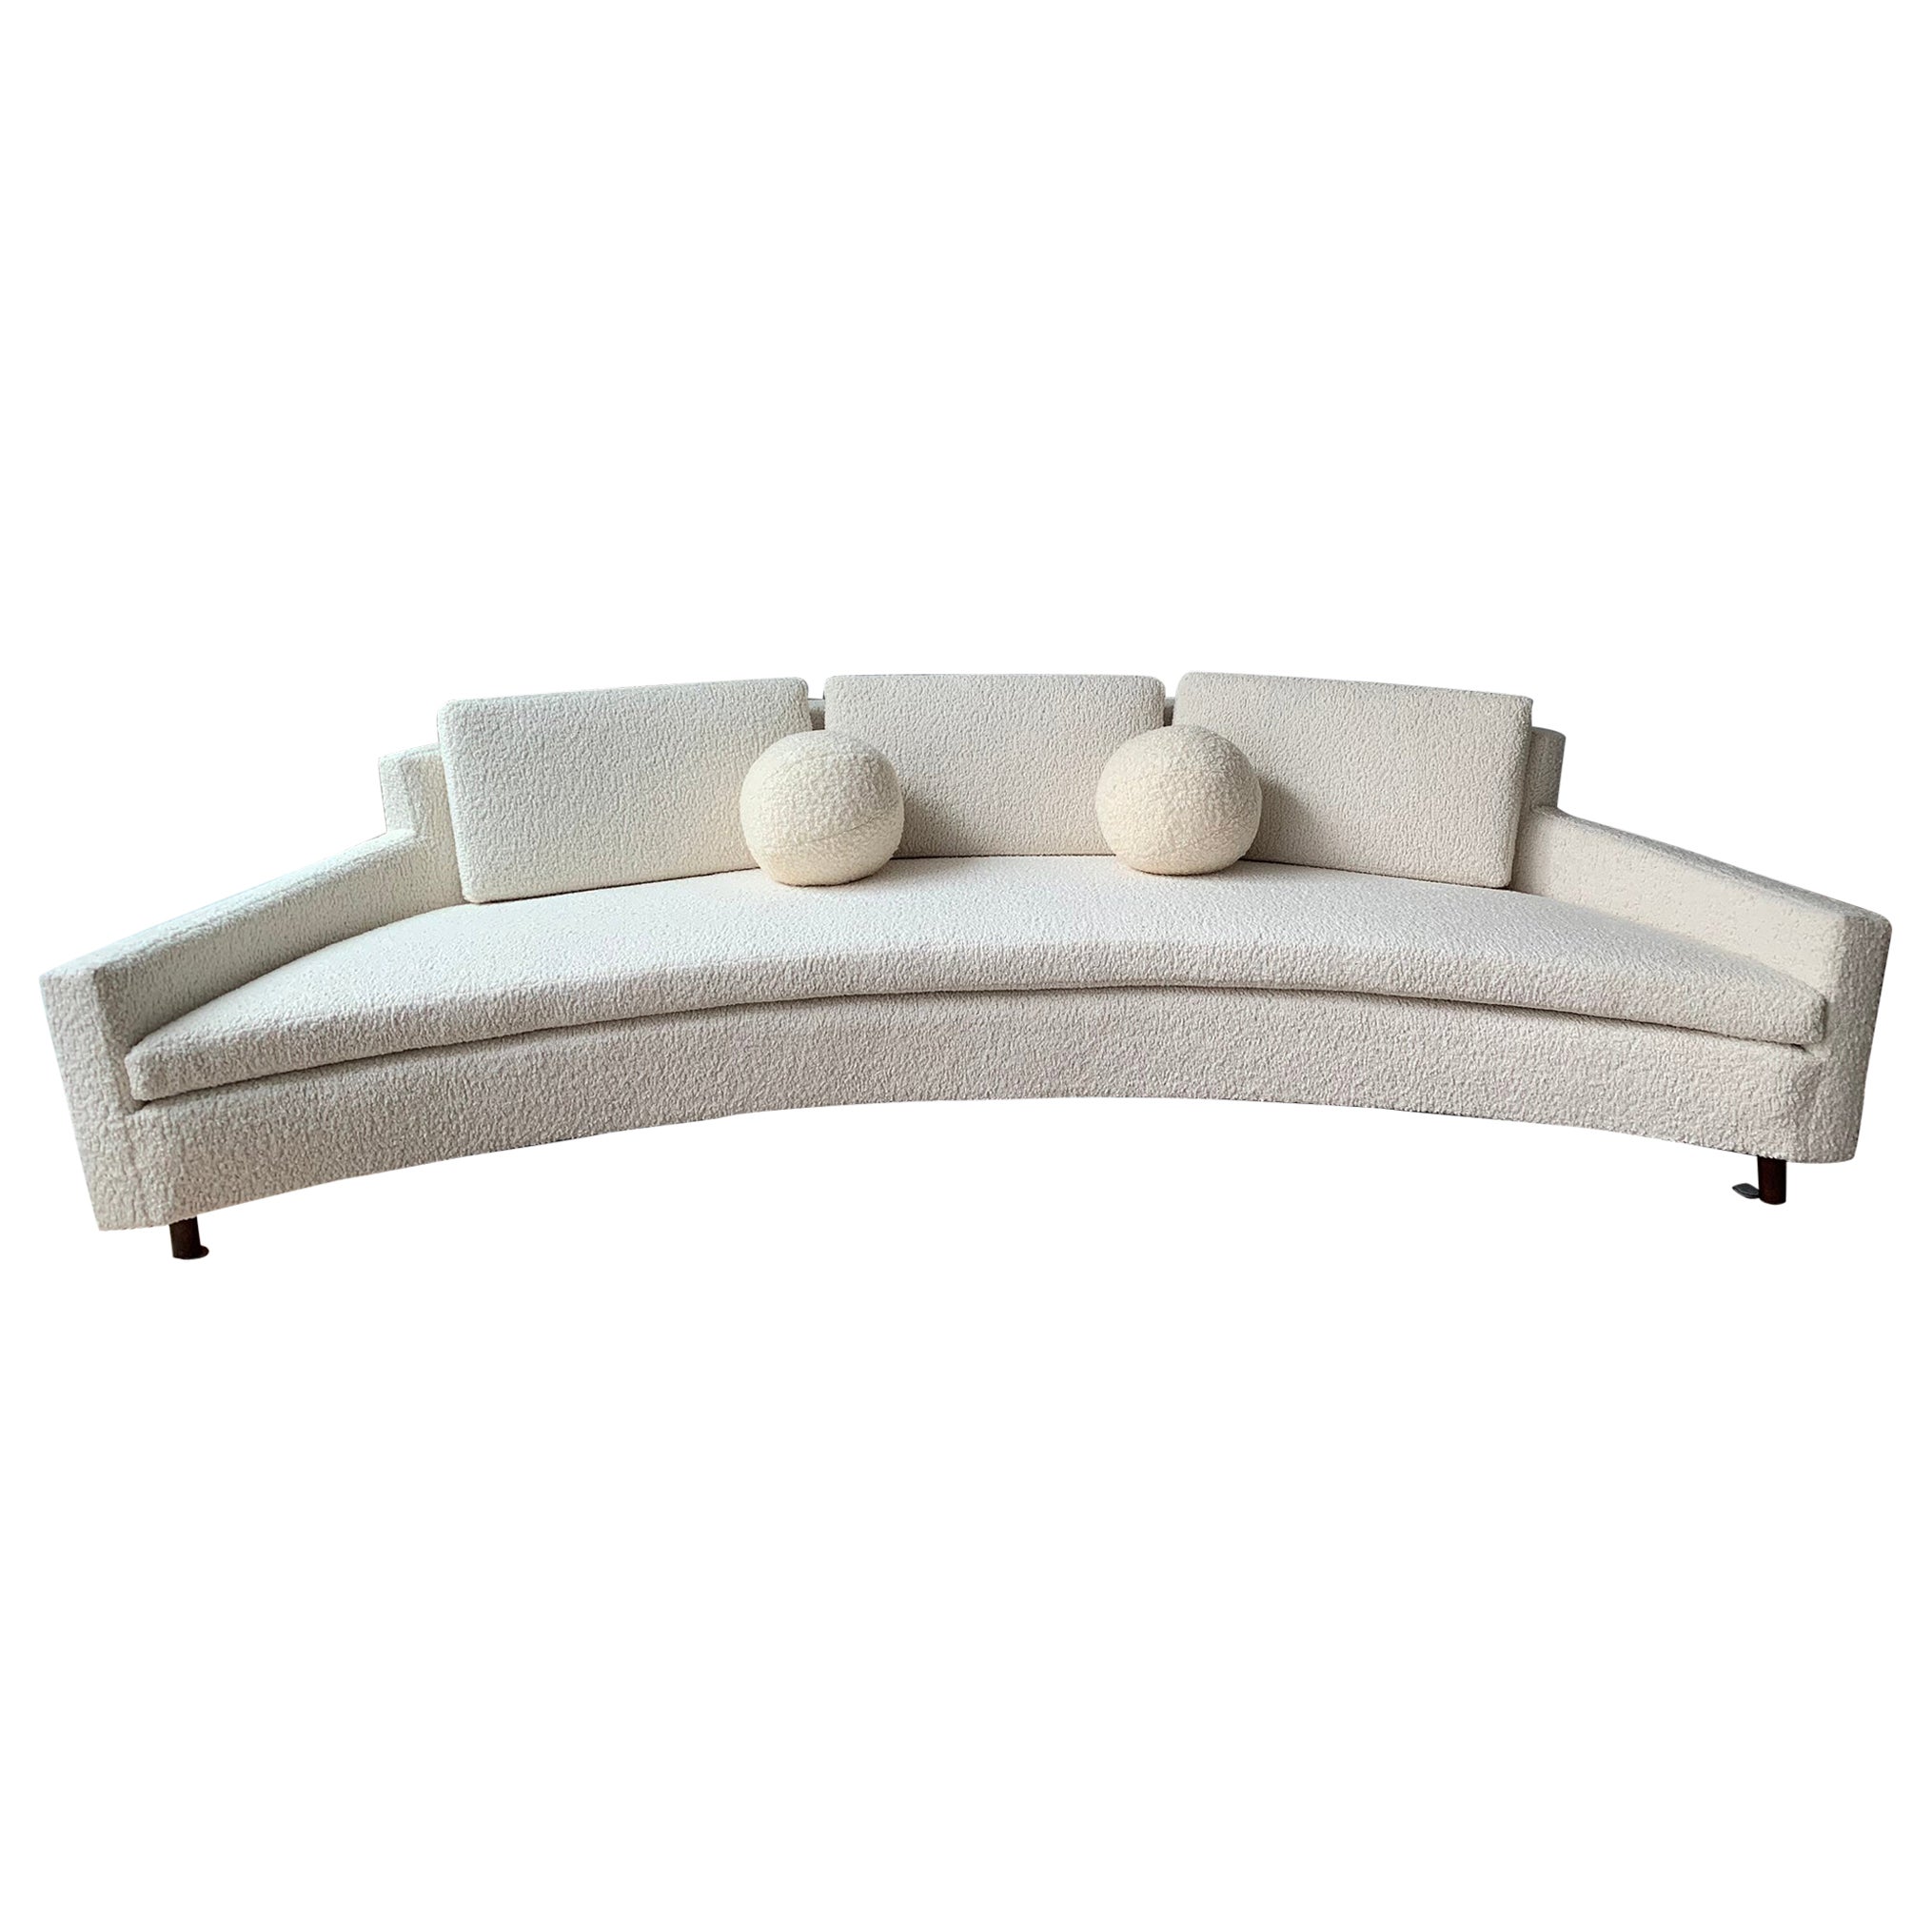 Harvey Probber Gebogenes Halbmond-Sofa, 1960er Jahre, 2 Stück verfügbar